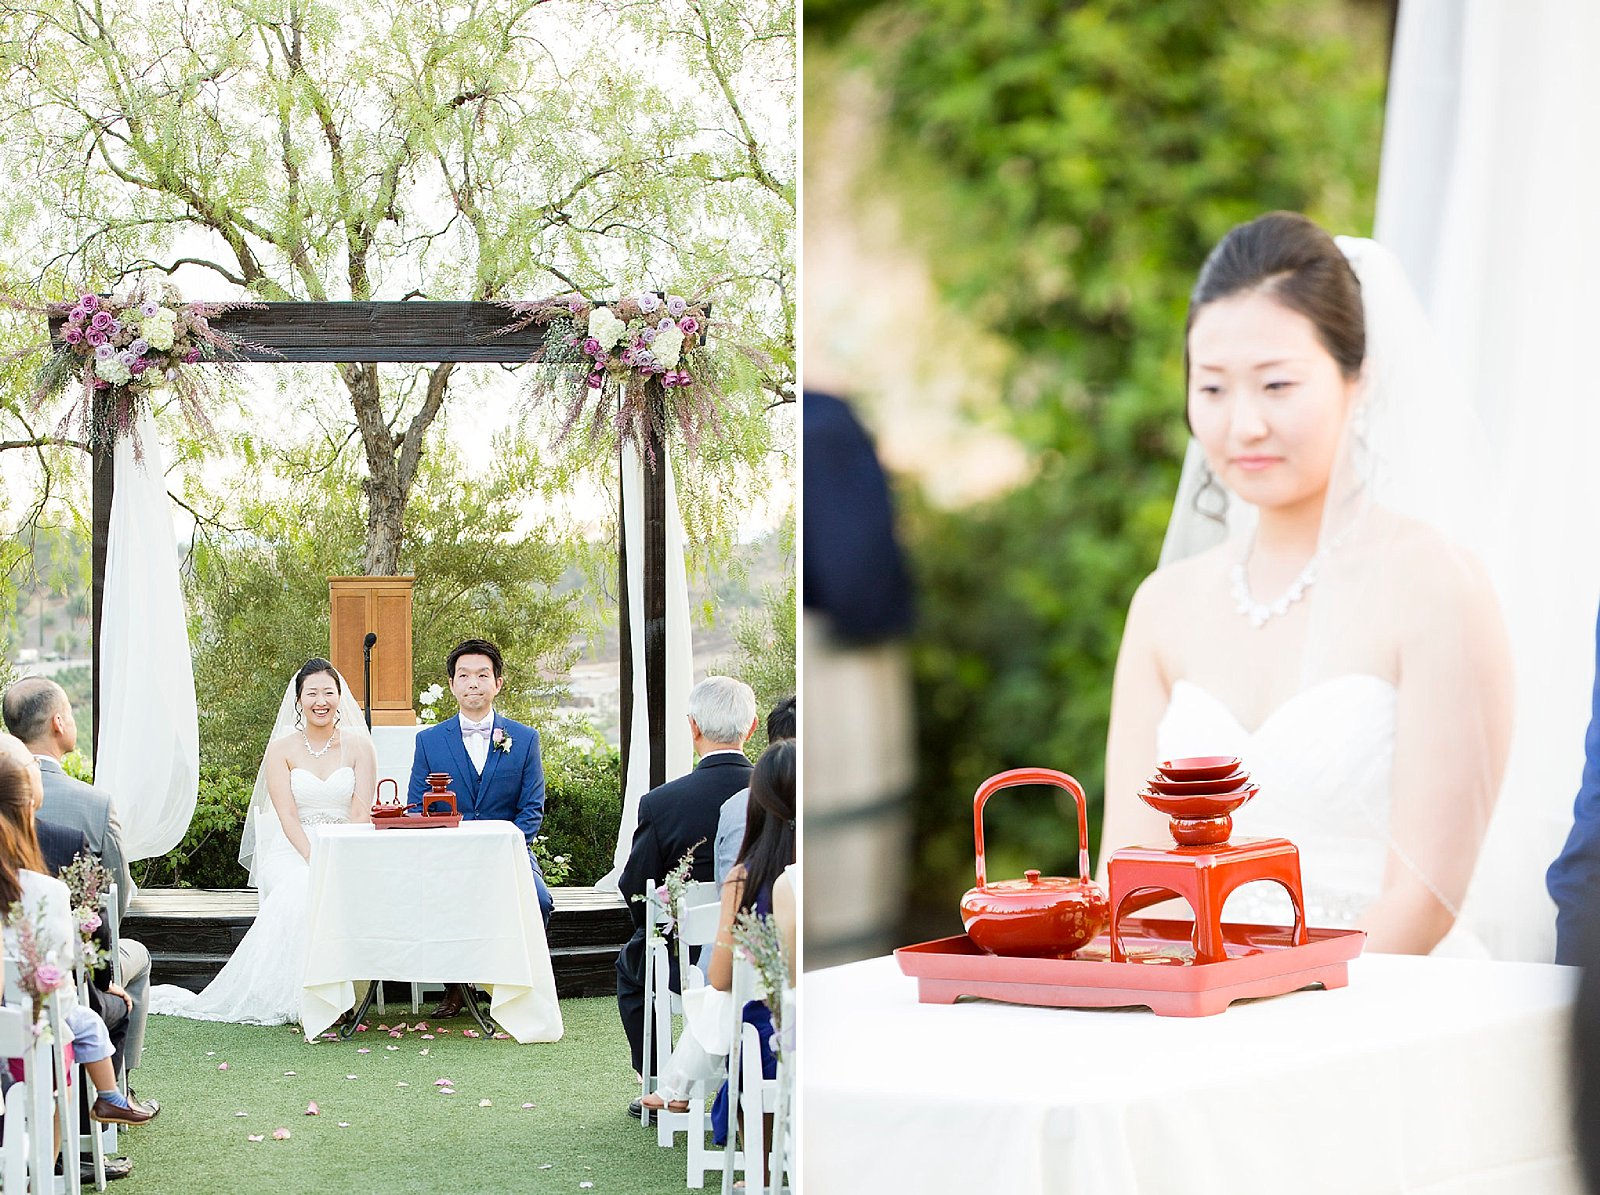 Randi Michelle Photography photographs sake exchange during wedding ceremony